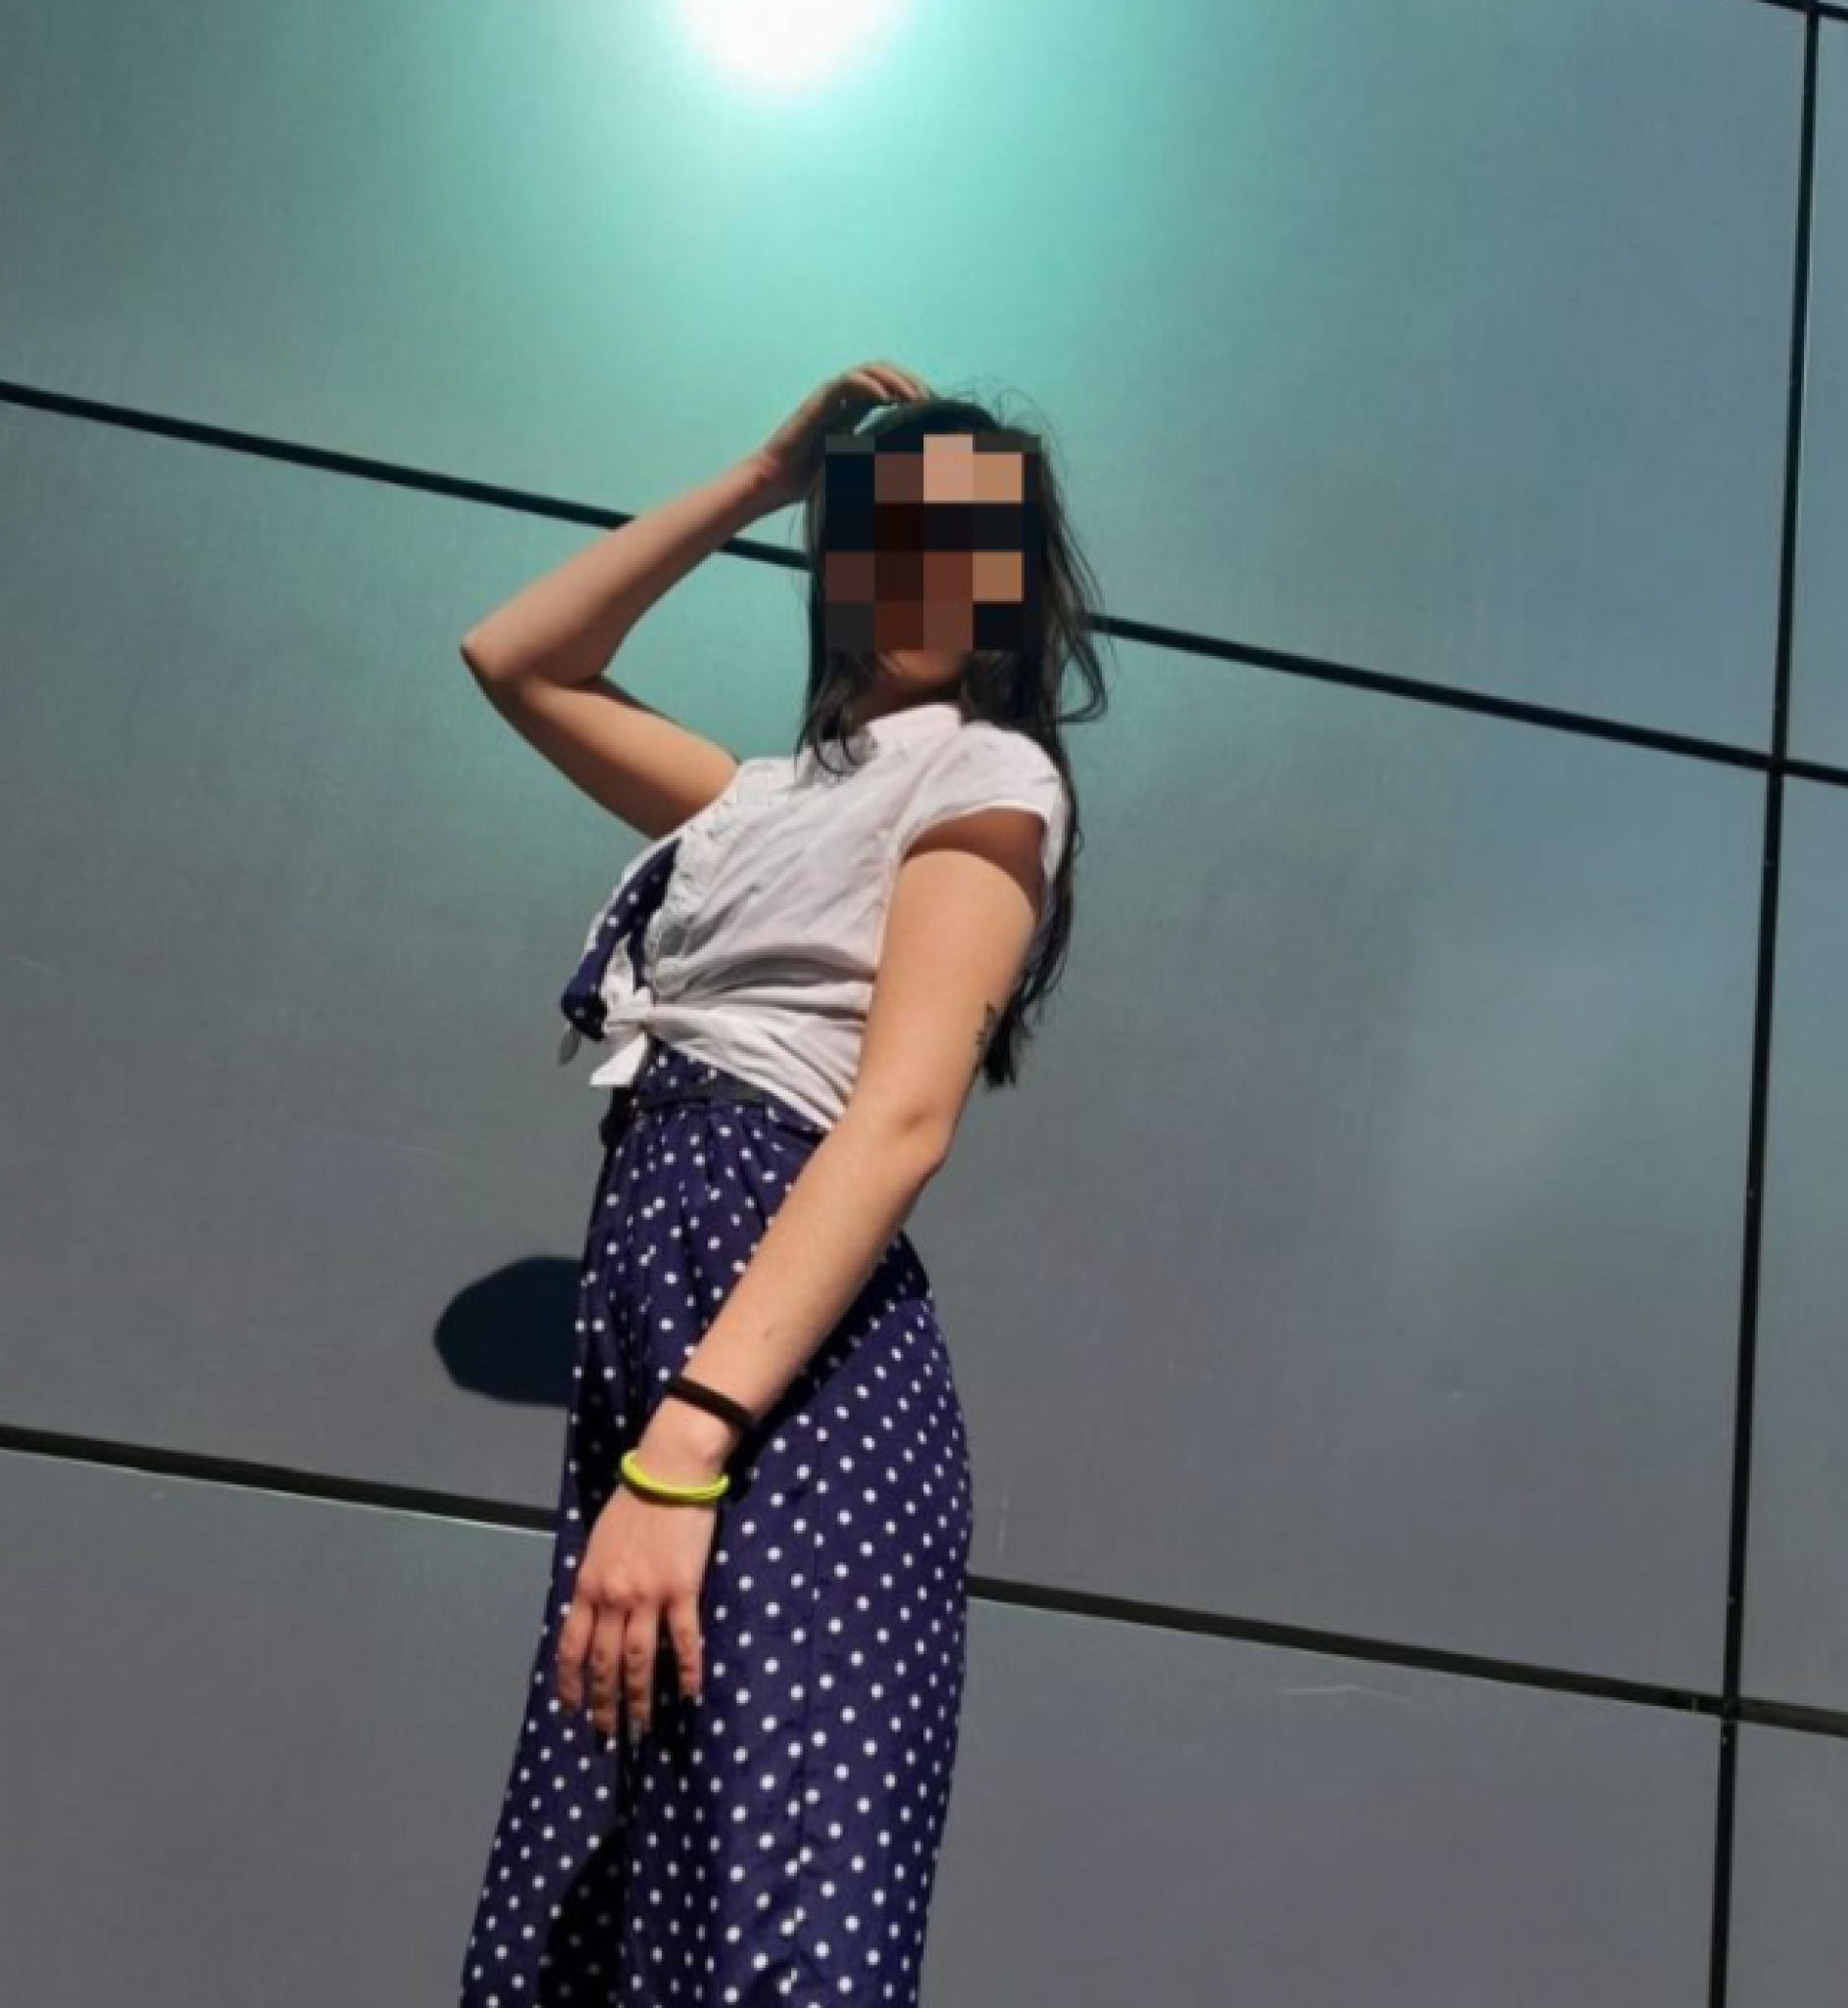 KAKVA JE VEZA AZRE Š. VEZE SA UBISTVOM ''ESKOBARA?!'' Advokat osumnjičene devojke iz Brčkog tvrdi da ona nije umešana u zločin